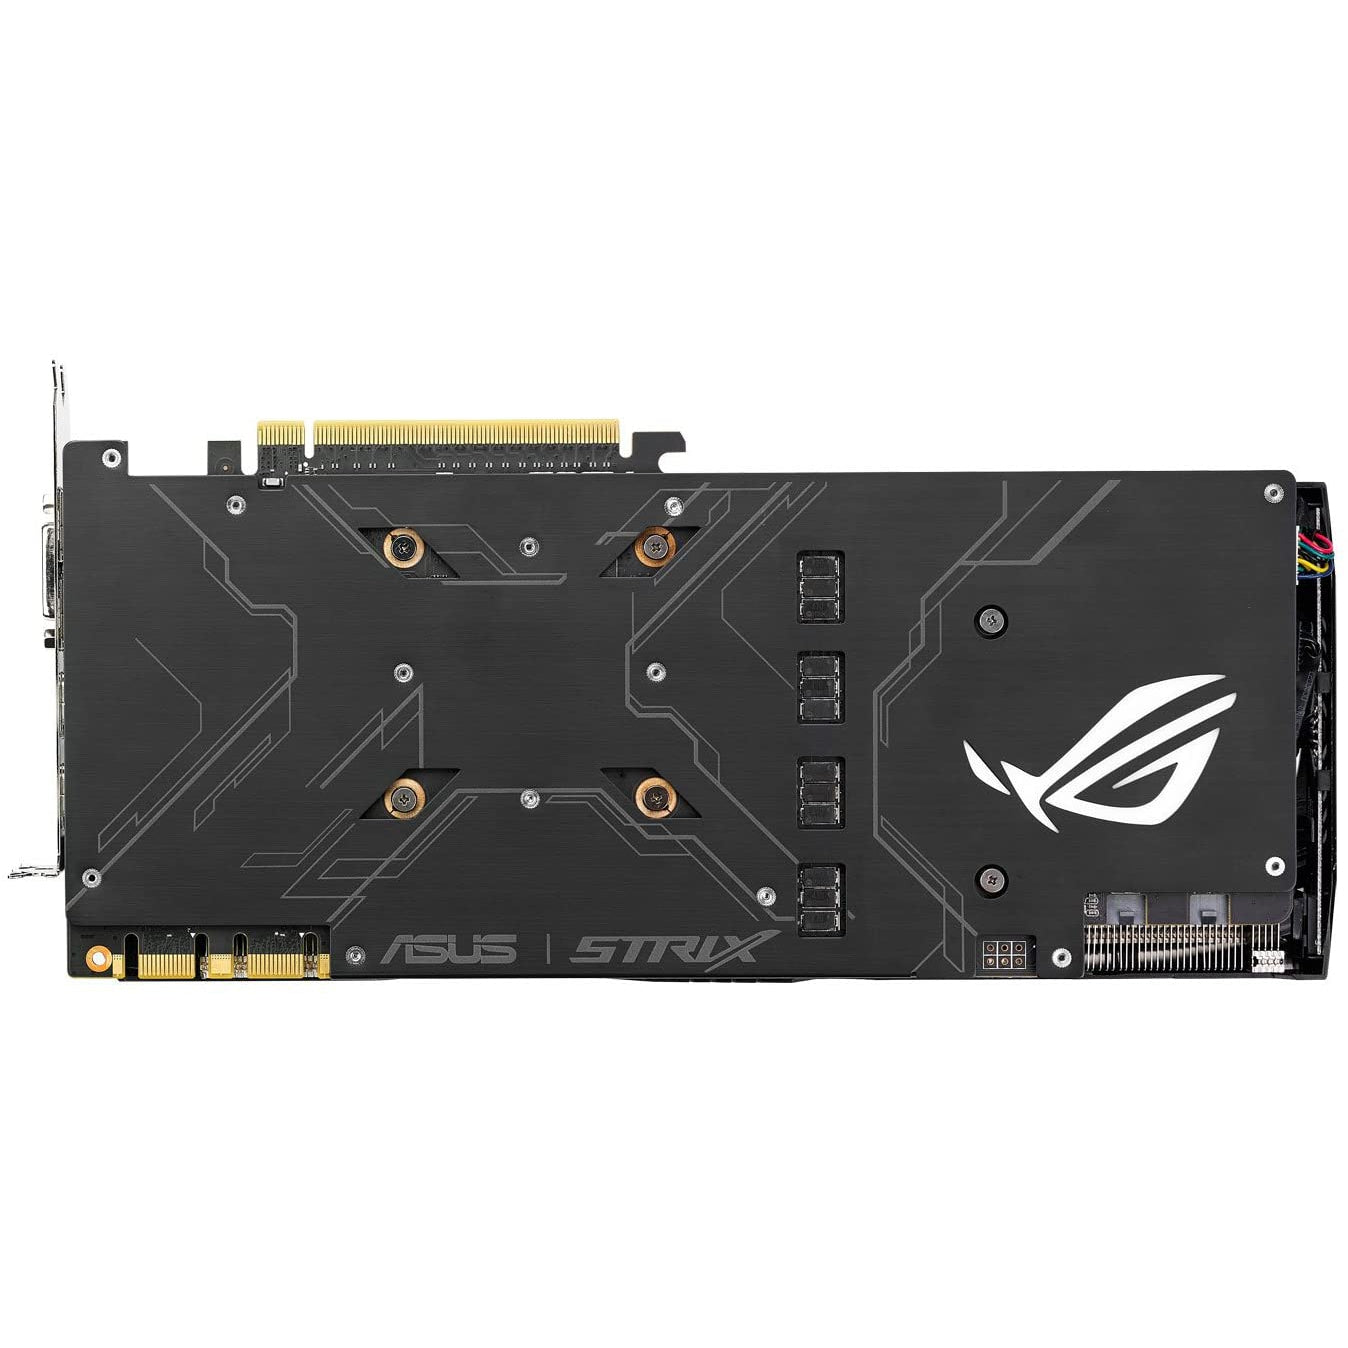 ASUS ROG Strix GeForce STRIX GTX 1080 Graphics Card (GAMING 8 GB GDDR5), 180 Watts - Black